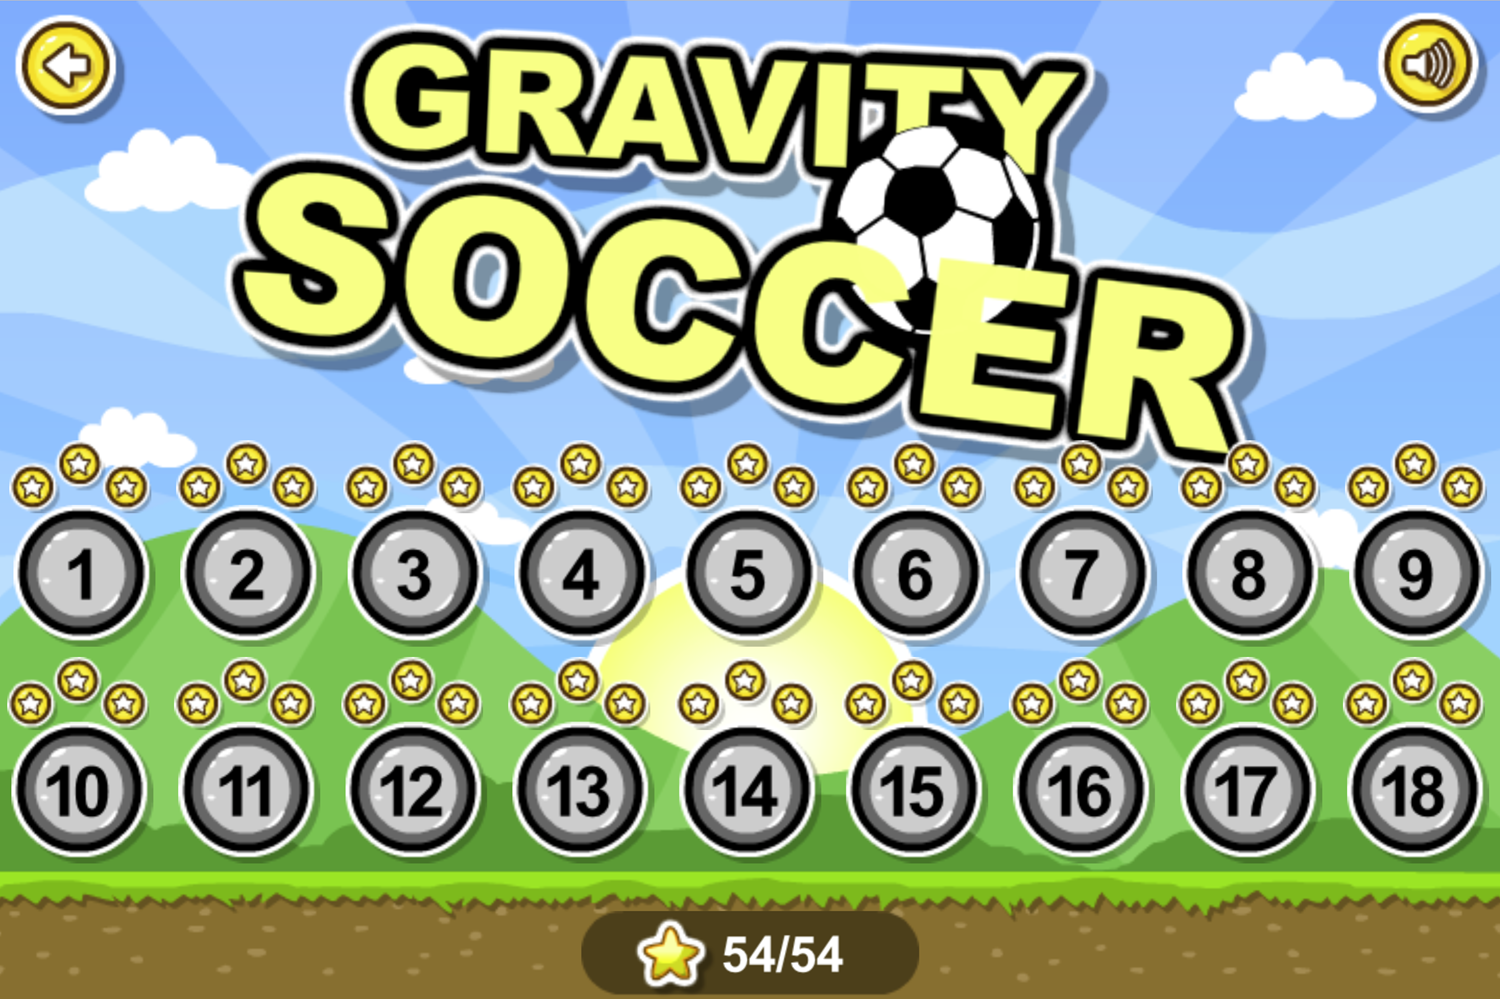 Gravity Soccer Game Level Select Screen Screenshot.